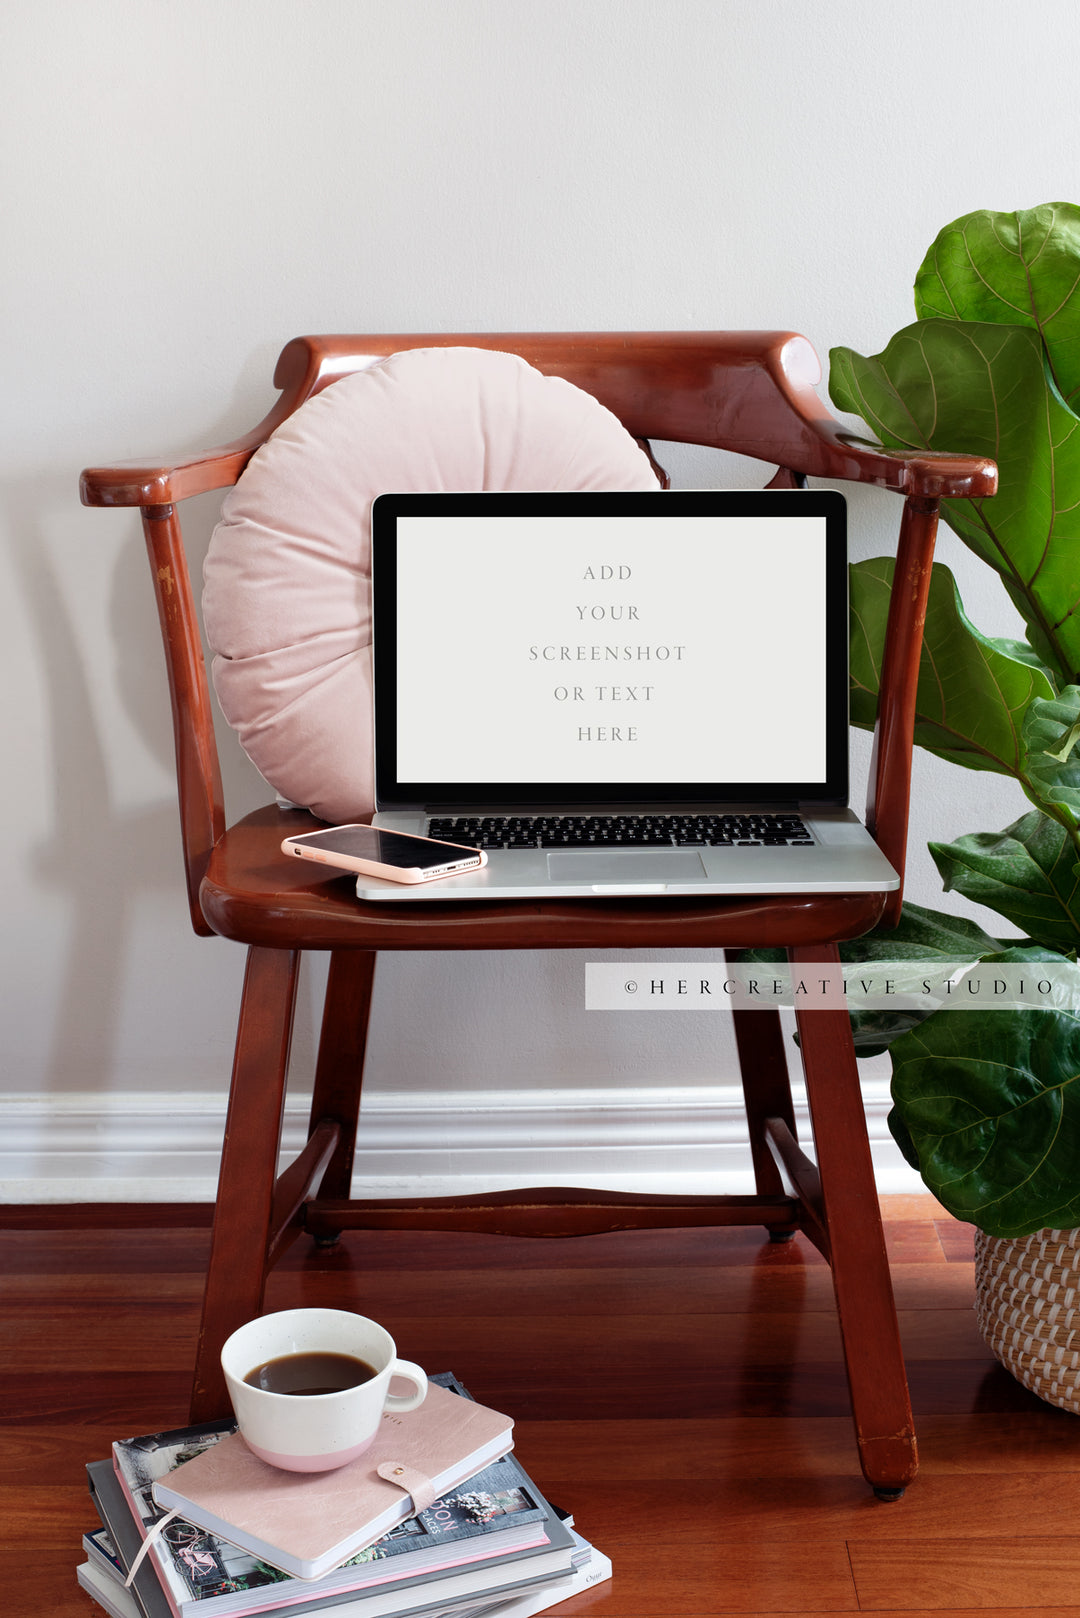 Laptop & Coffee on Brown Chair. Digital Image.